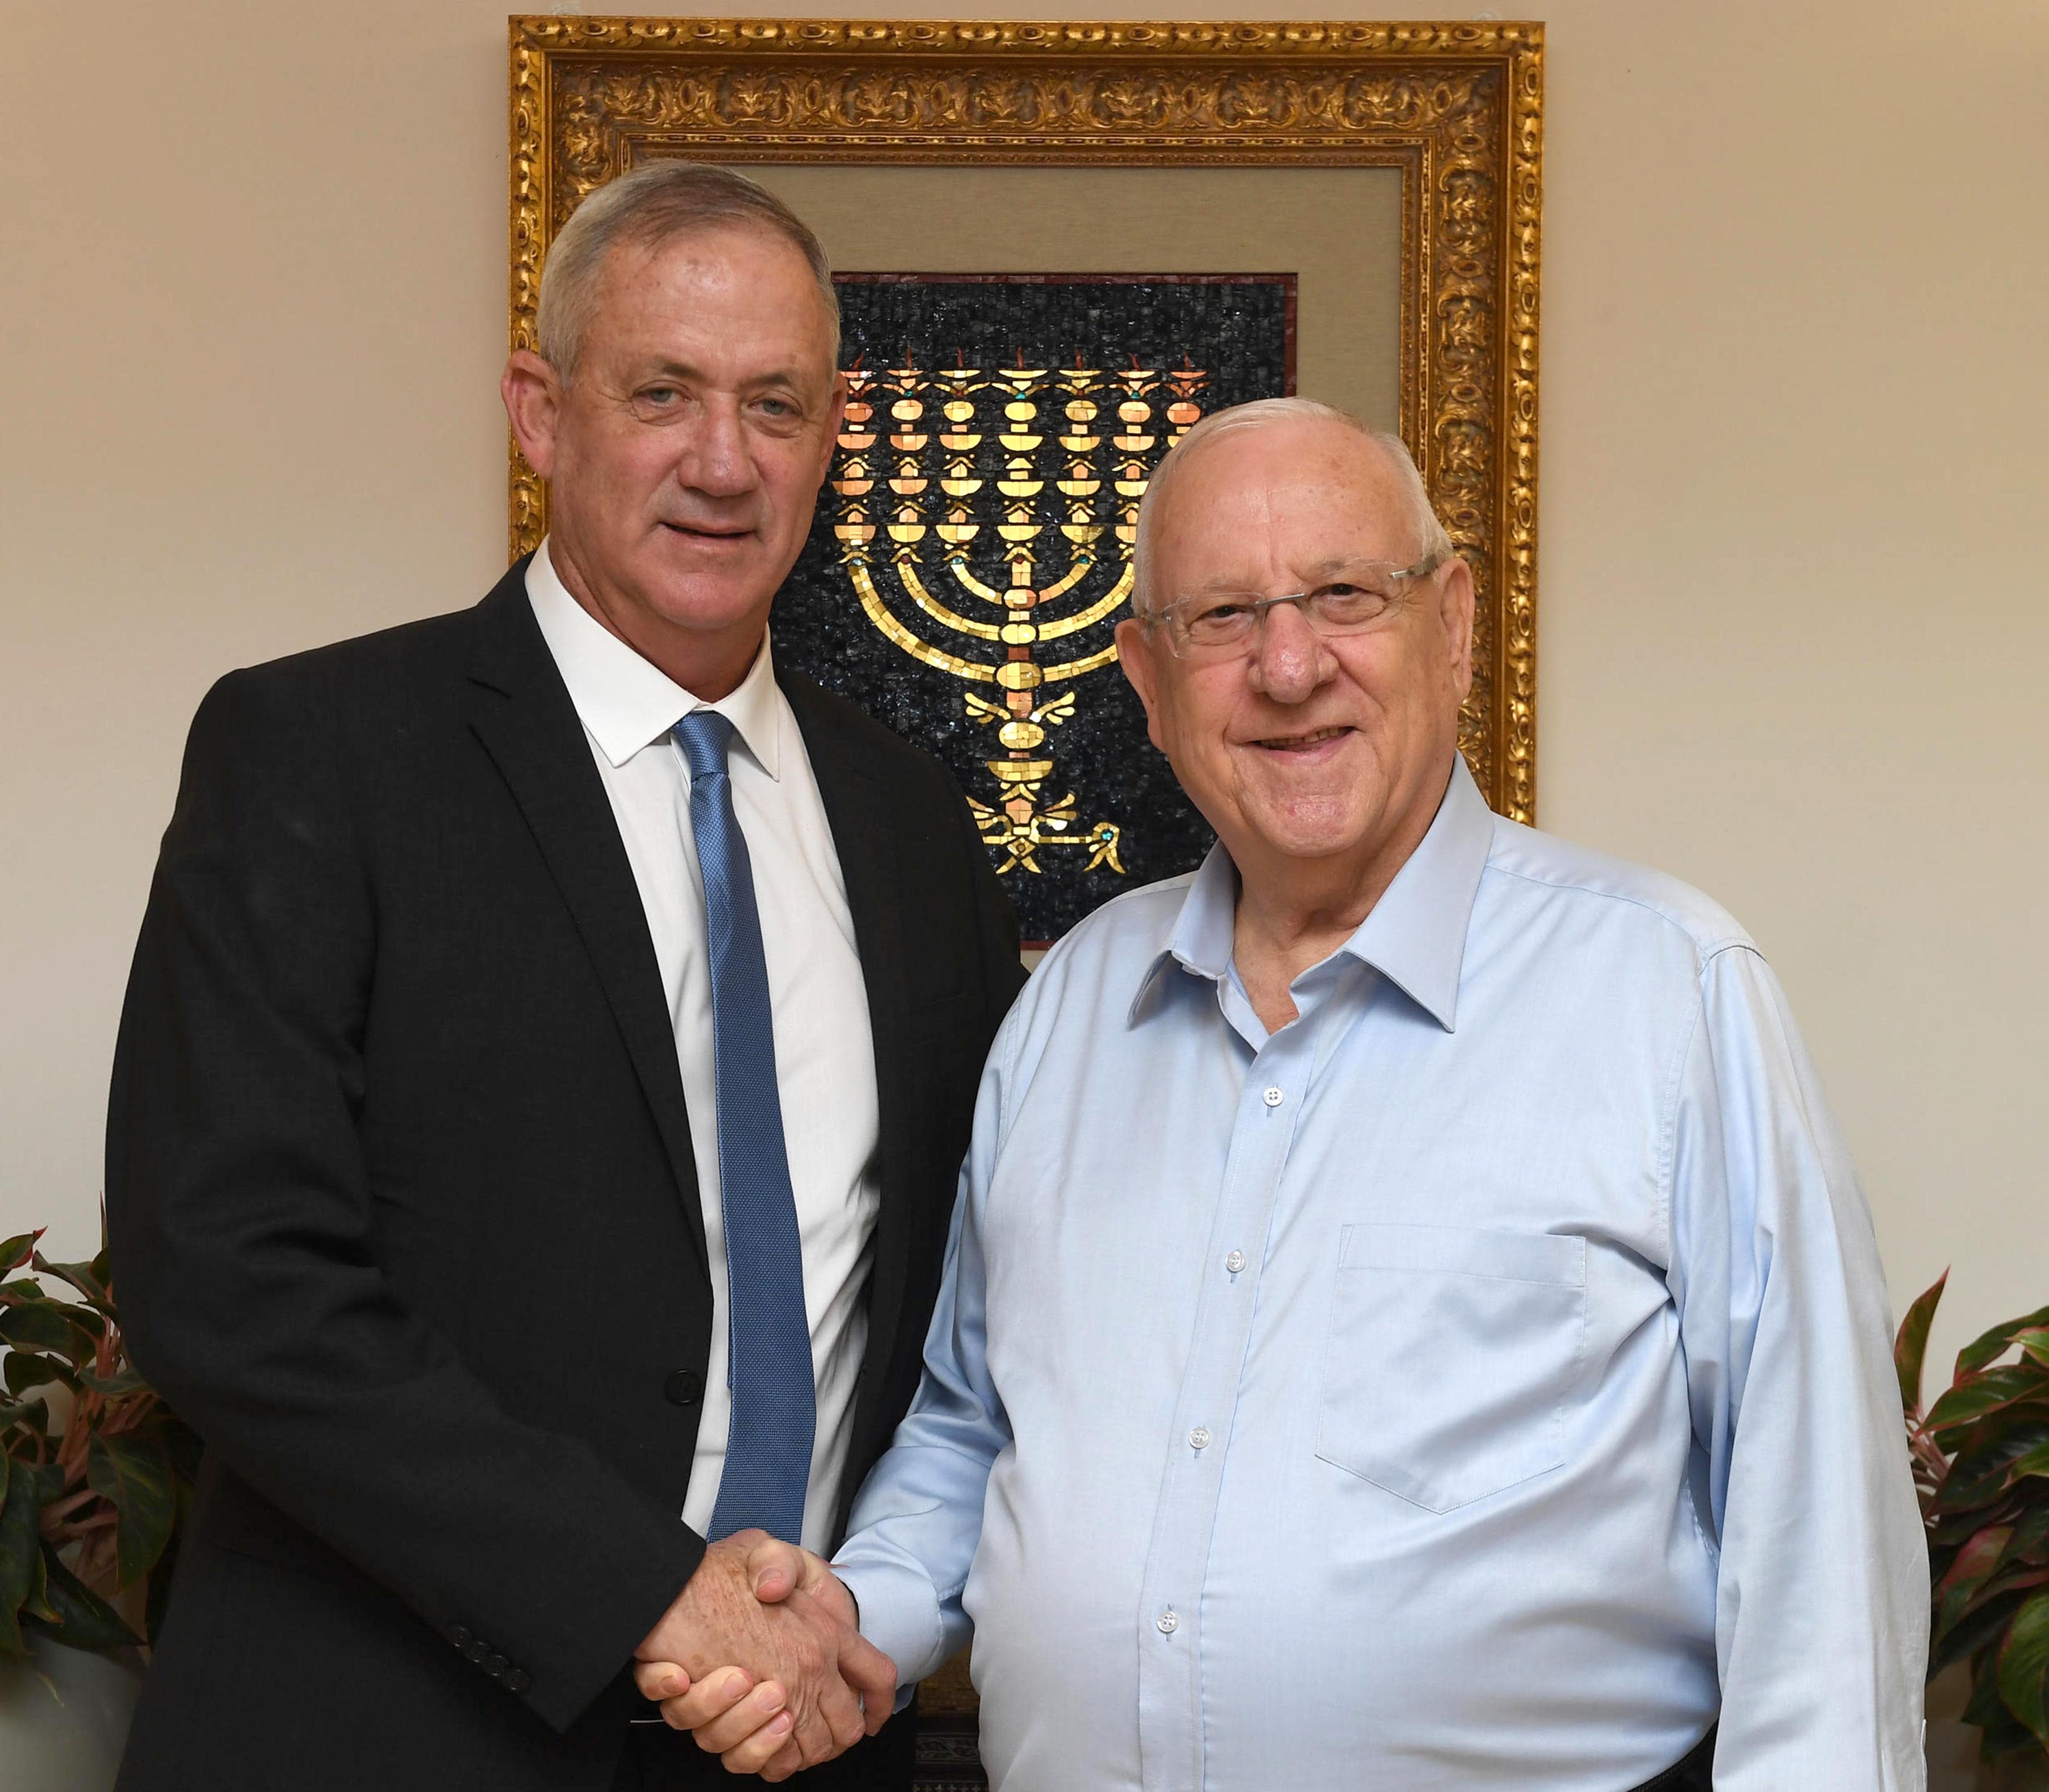 Netanyahu, Gantz spin minority coalition in push for unity compromise - The Jerusalem Post